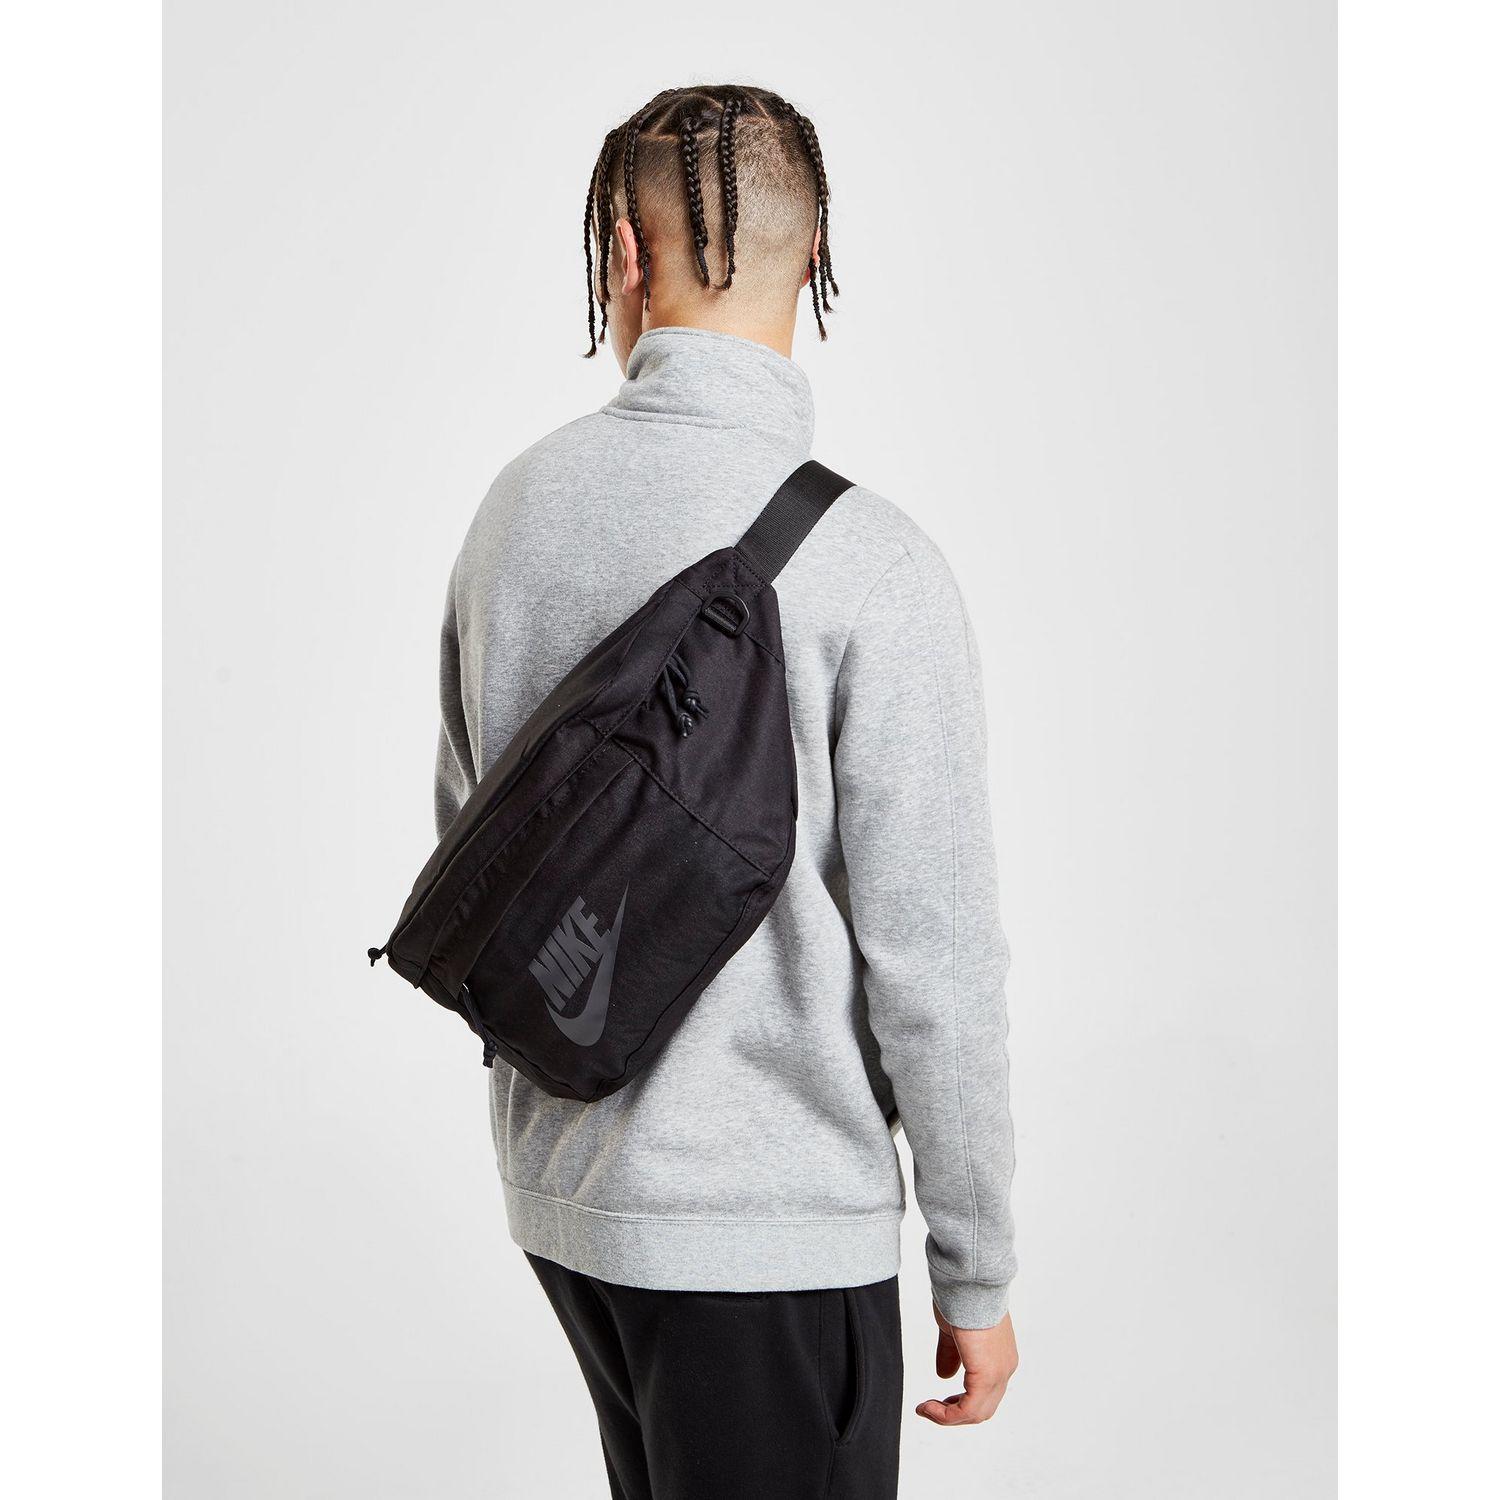 Nike Synthetic Tech Waist Bag in Black 